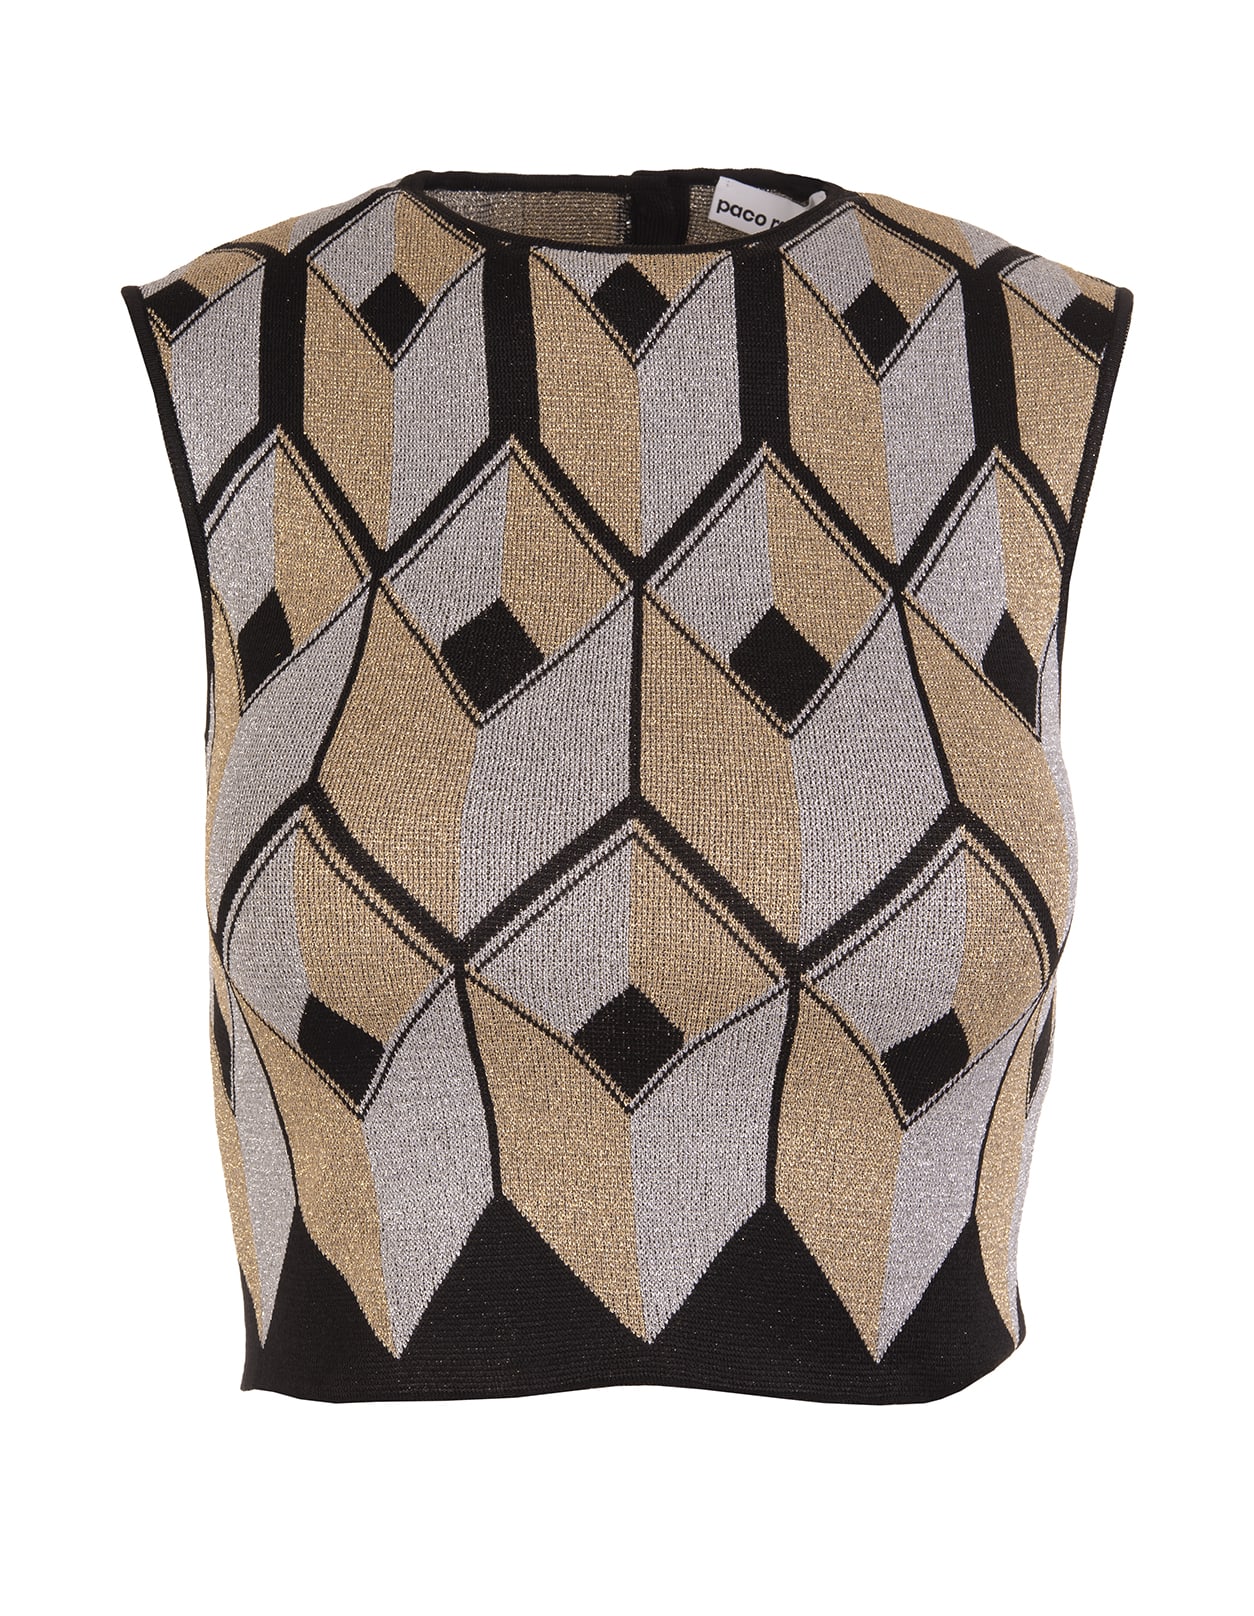 Paco Rabanne Black Sleeveless Top With Iridescent Geometric Pattern